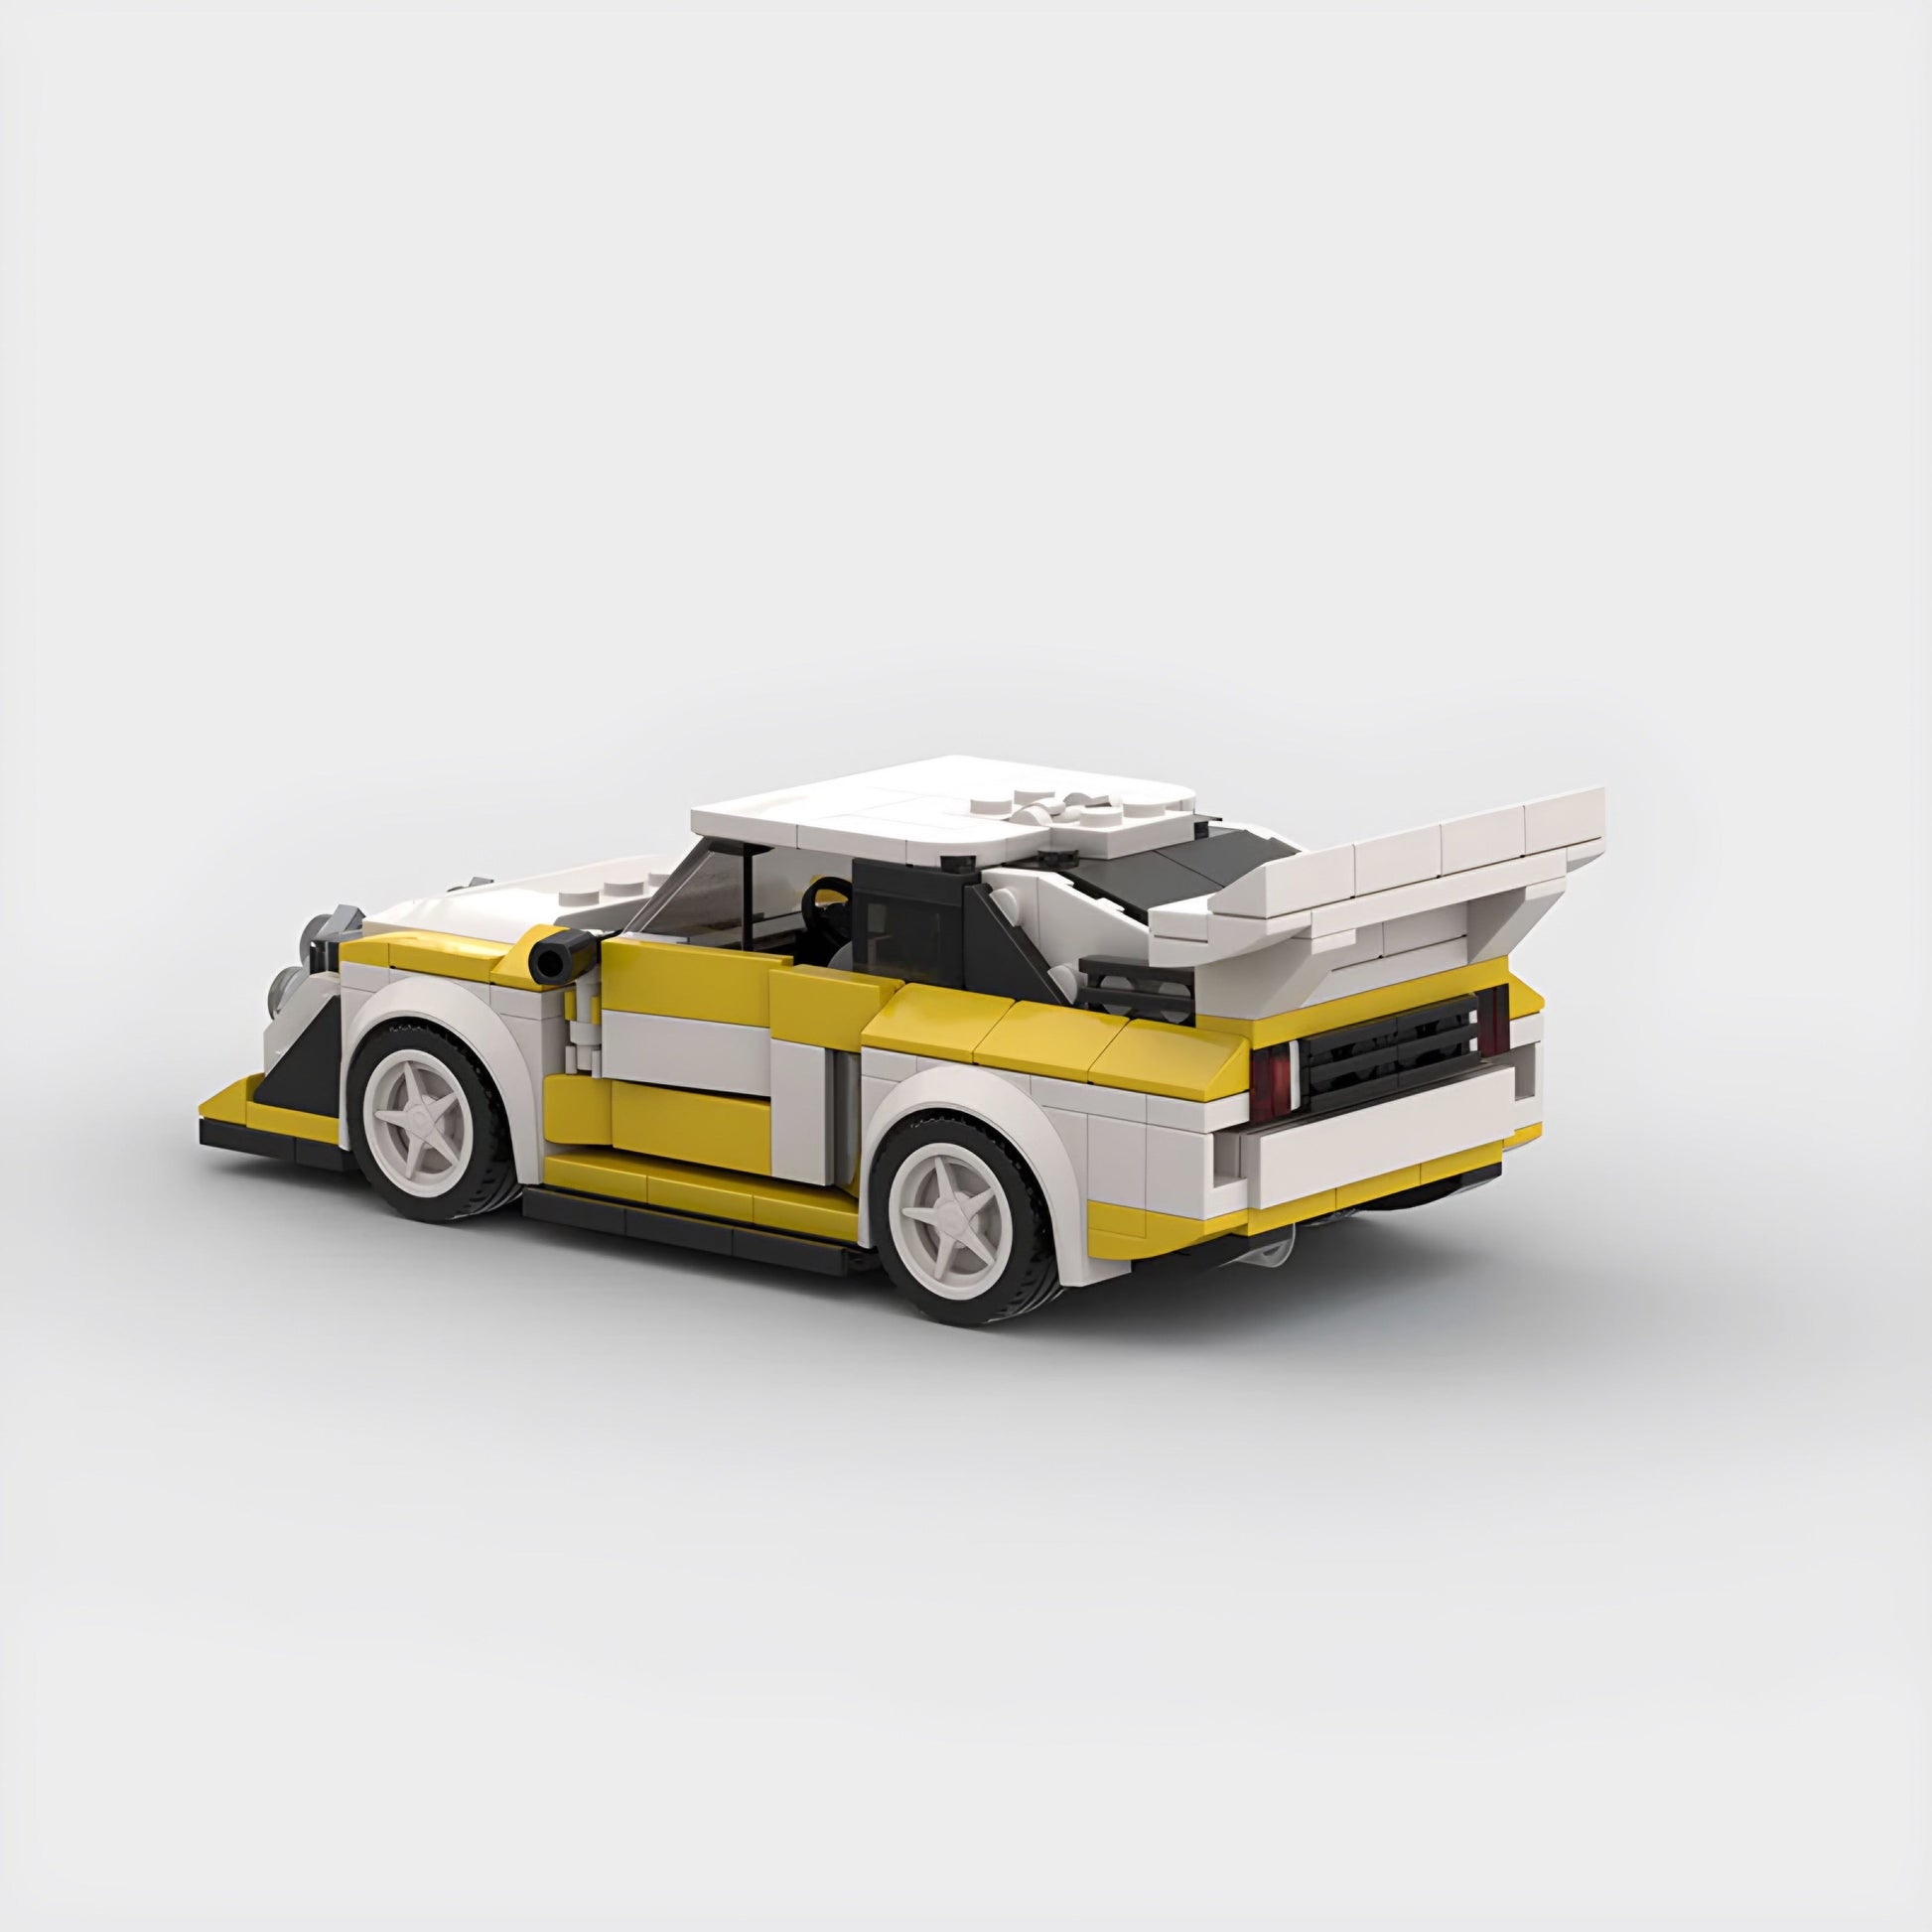 1985 Audi Sport quattro S1 - KüBo Bricks